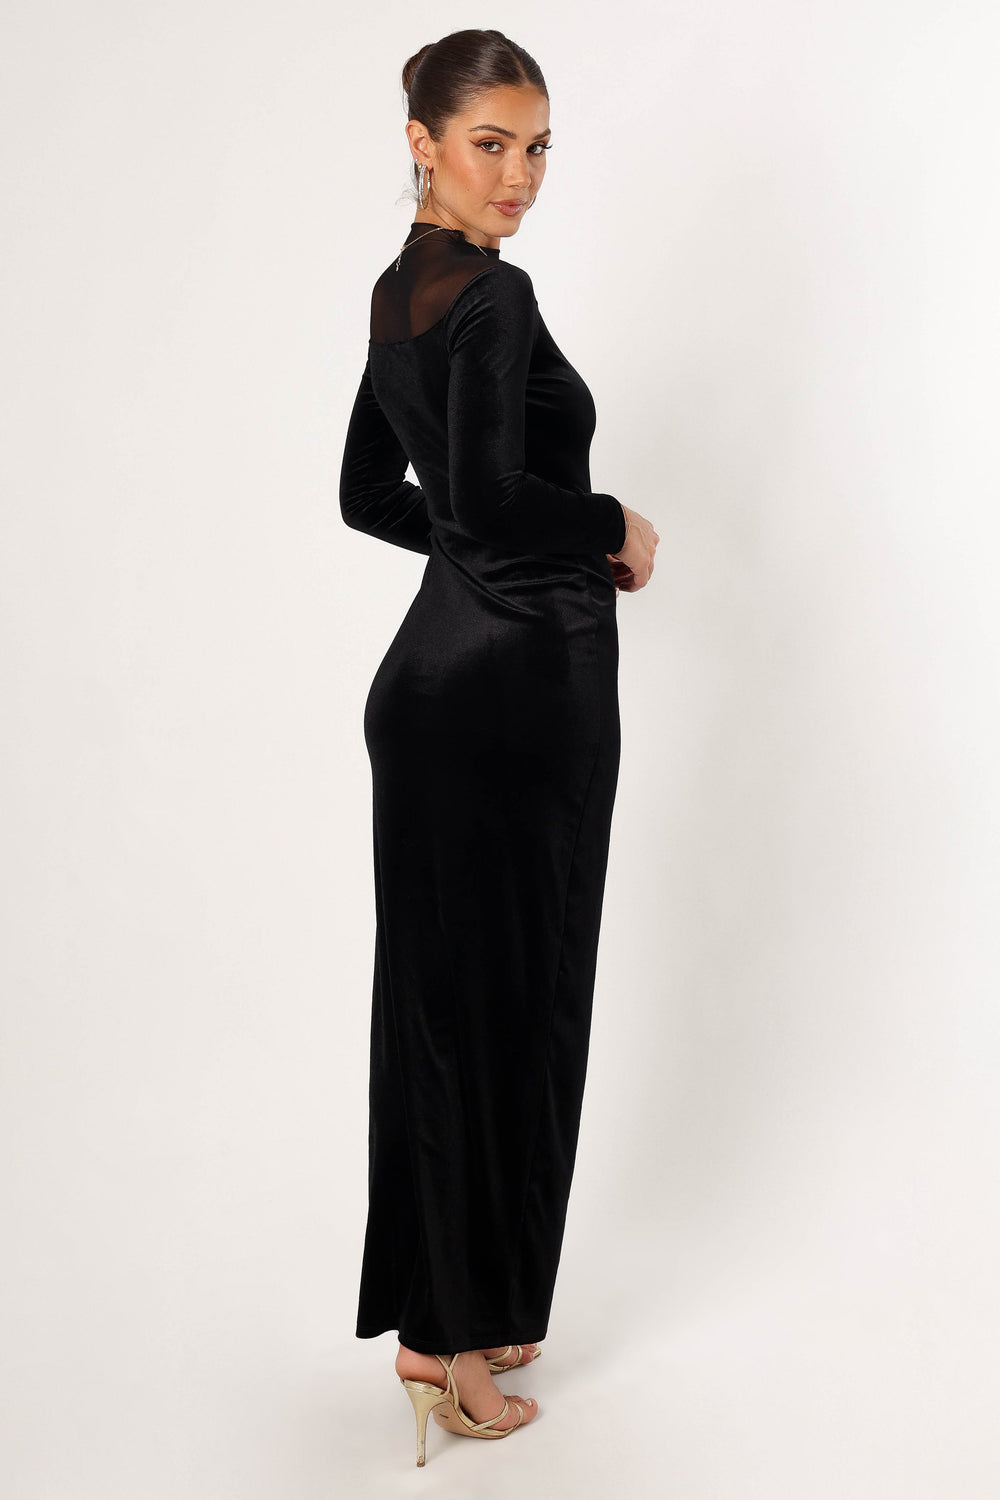 Jessica Long Sleeve Maxi Dress - Black - Petal & Pup USA